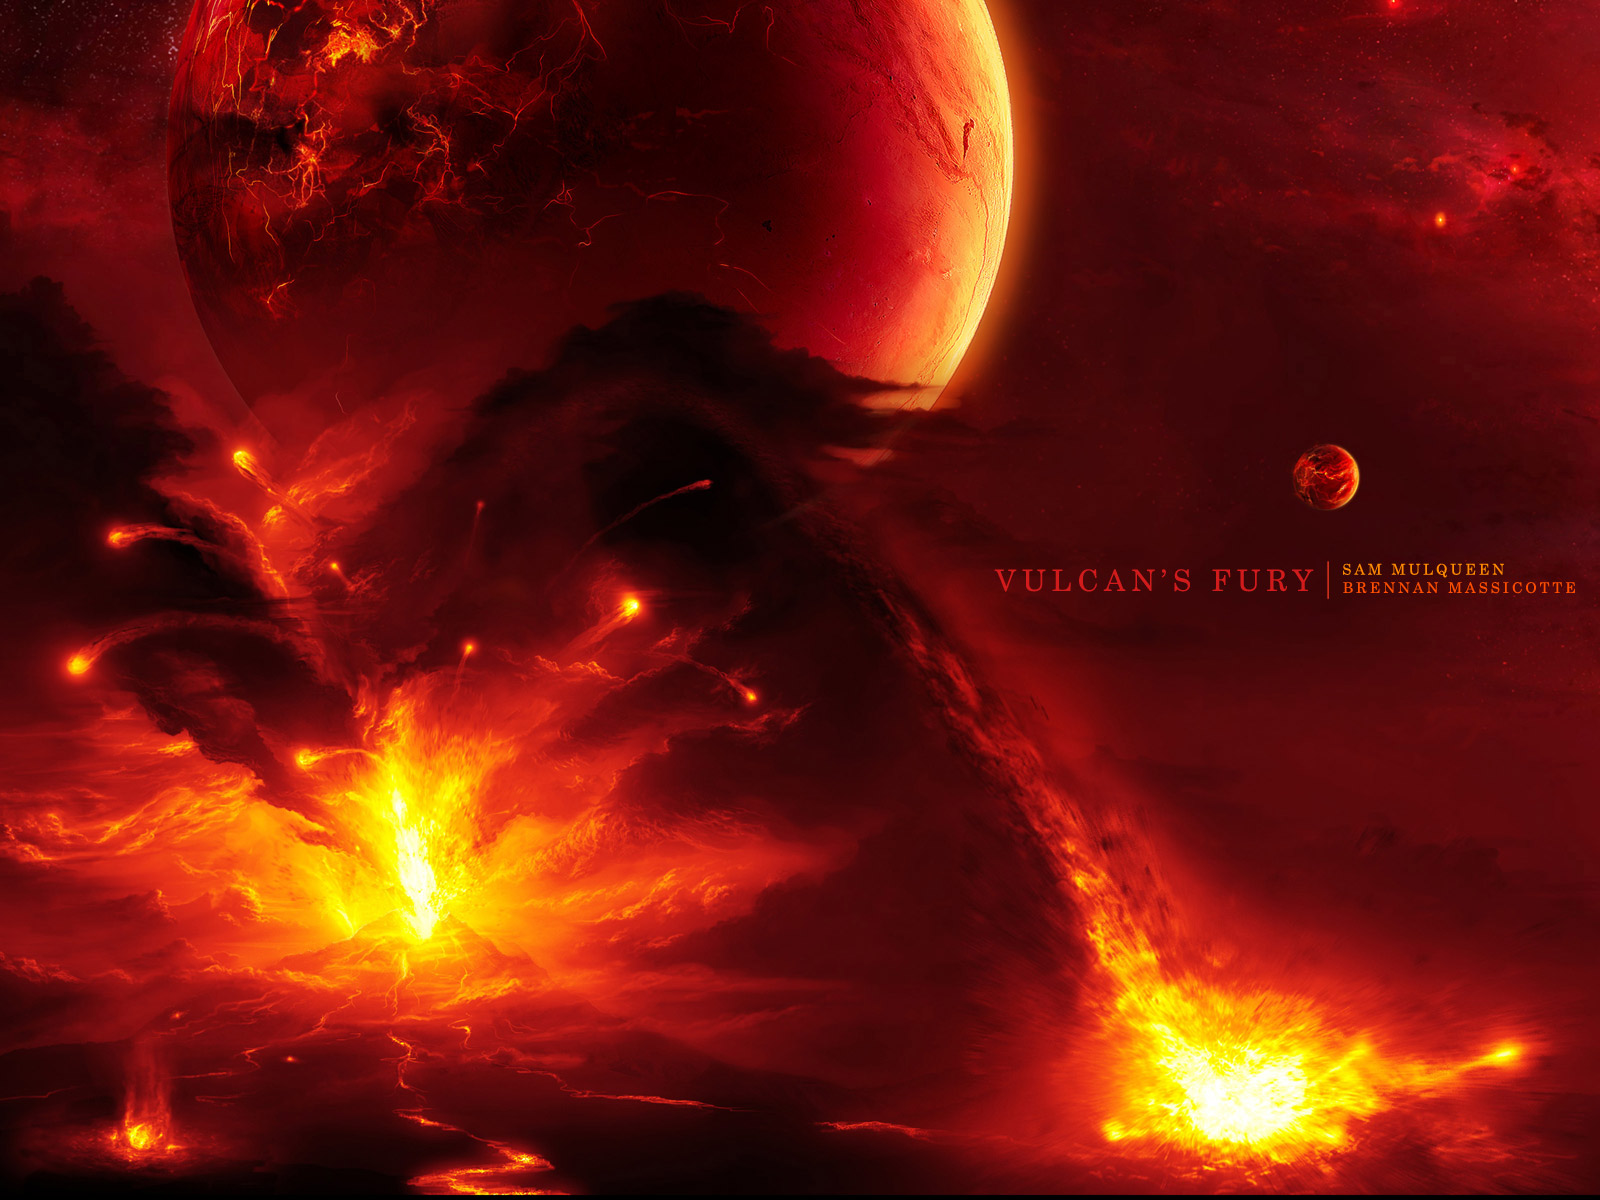 Space/Fantasy Wallpaper Set 6 » VulcansFury-1600-Volcano